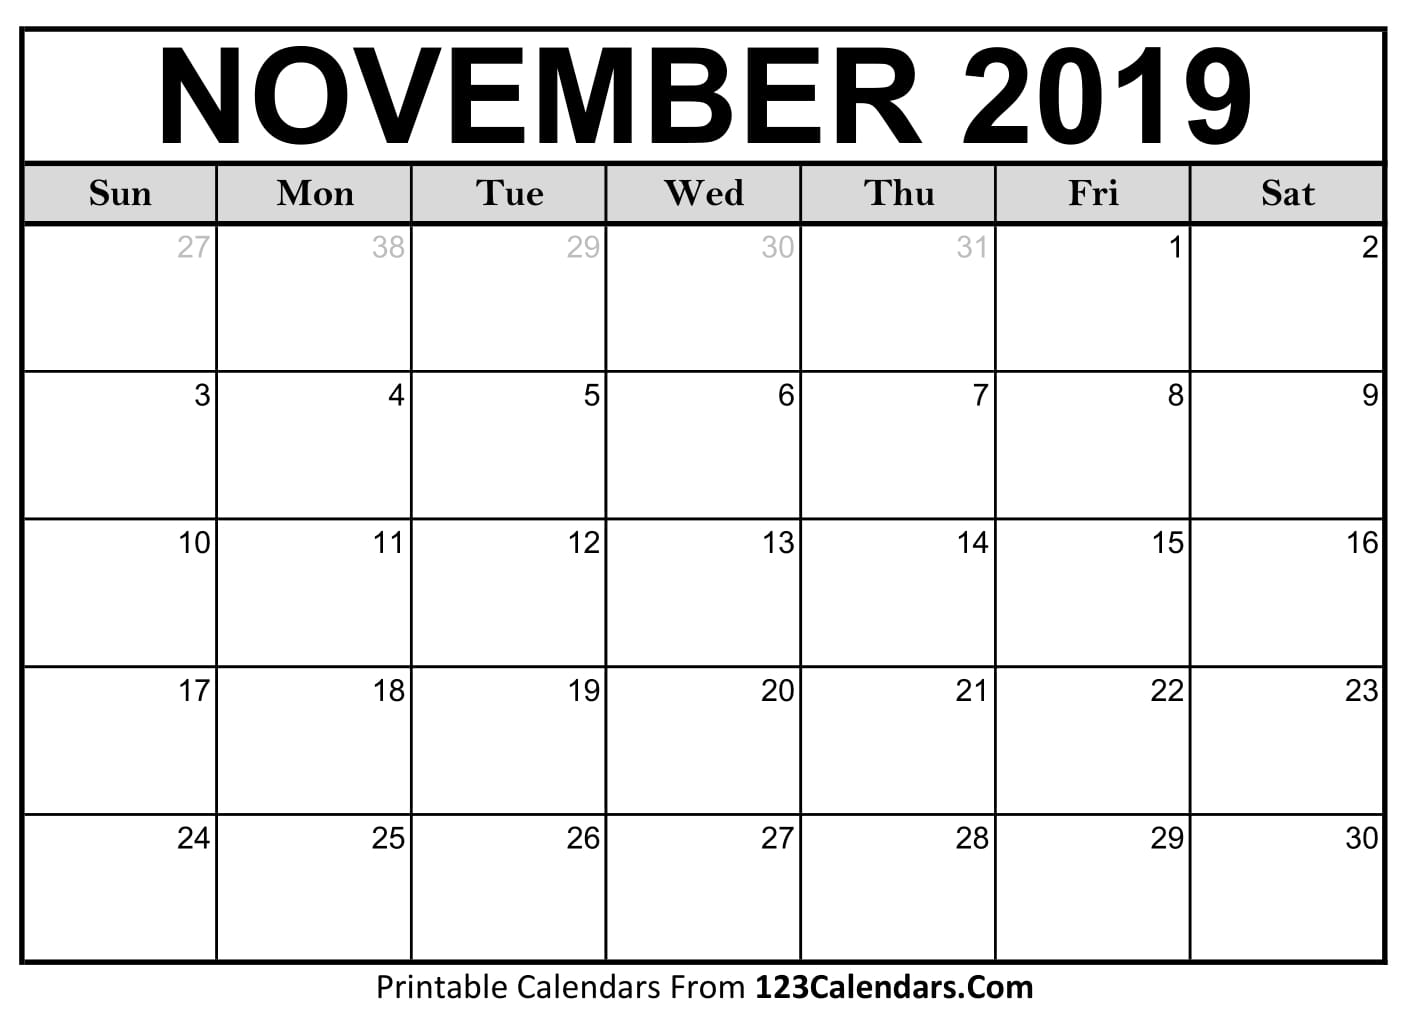 november-2019-printable-calendar-123calendars